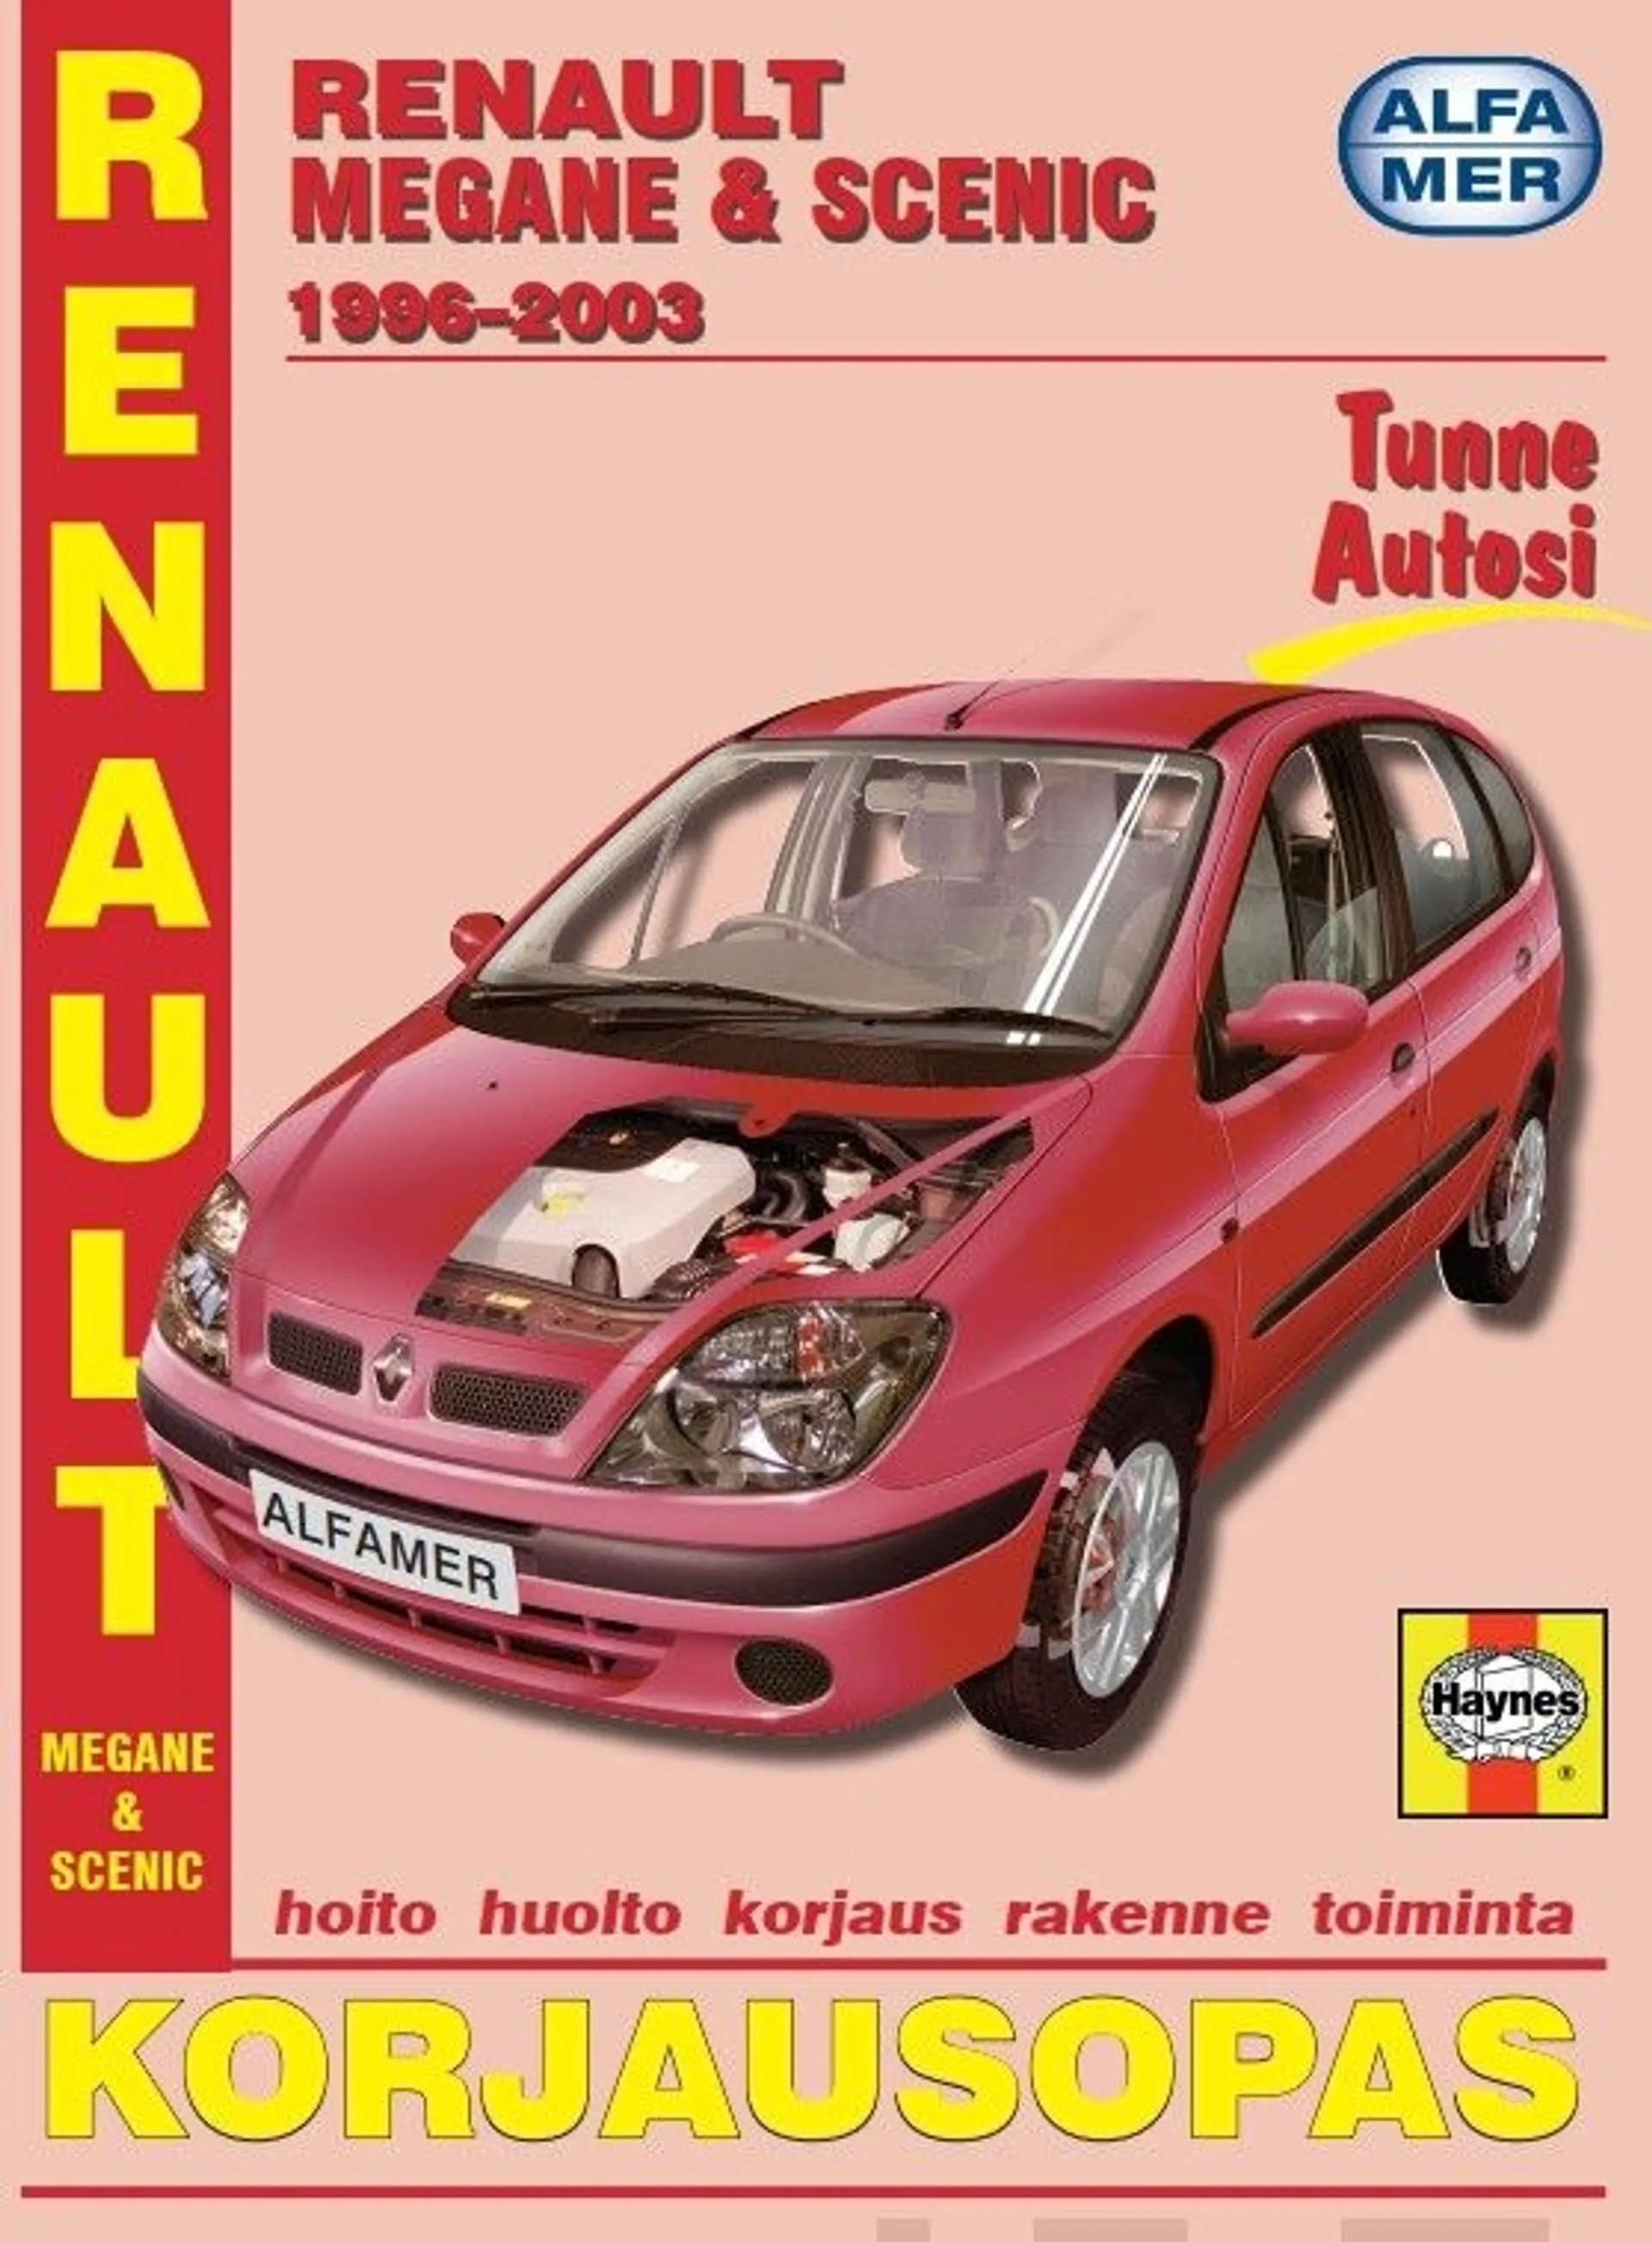 Mauno, Renault Megane & Scenic 1996-2003